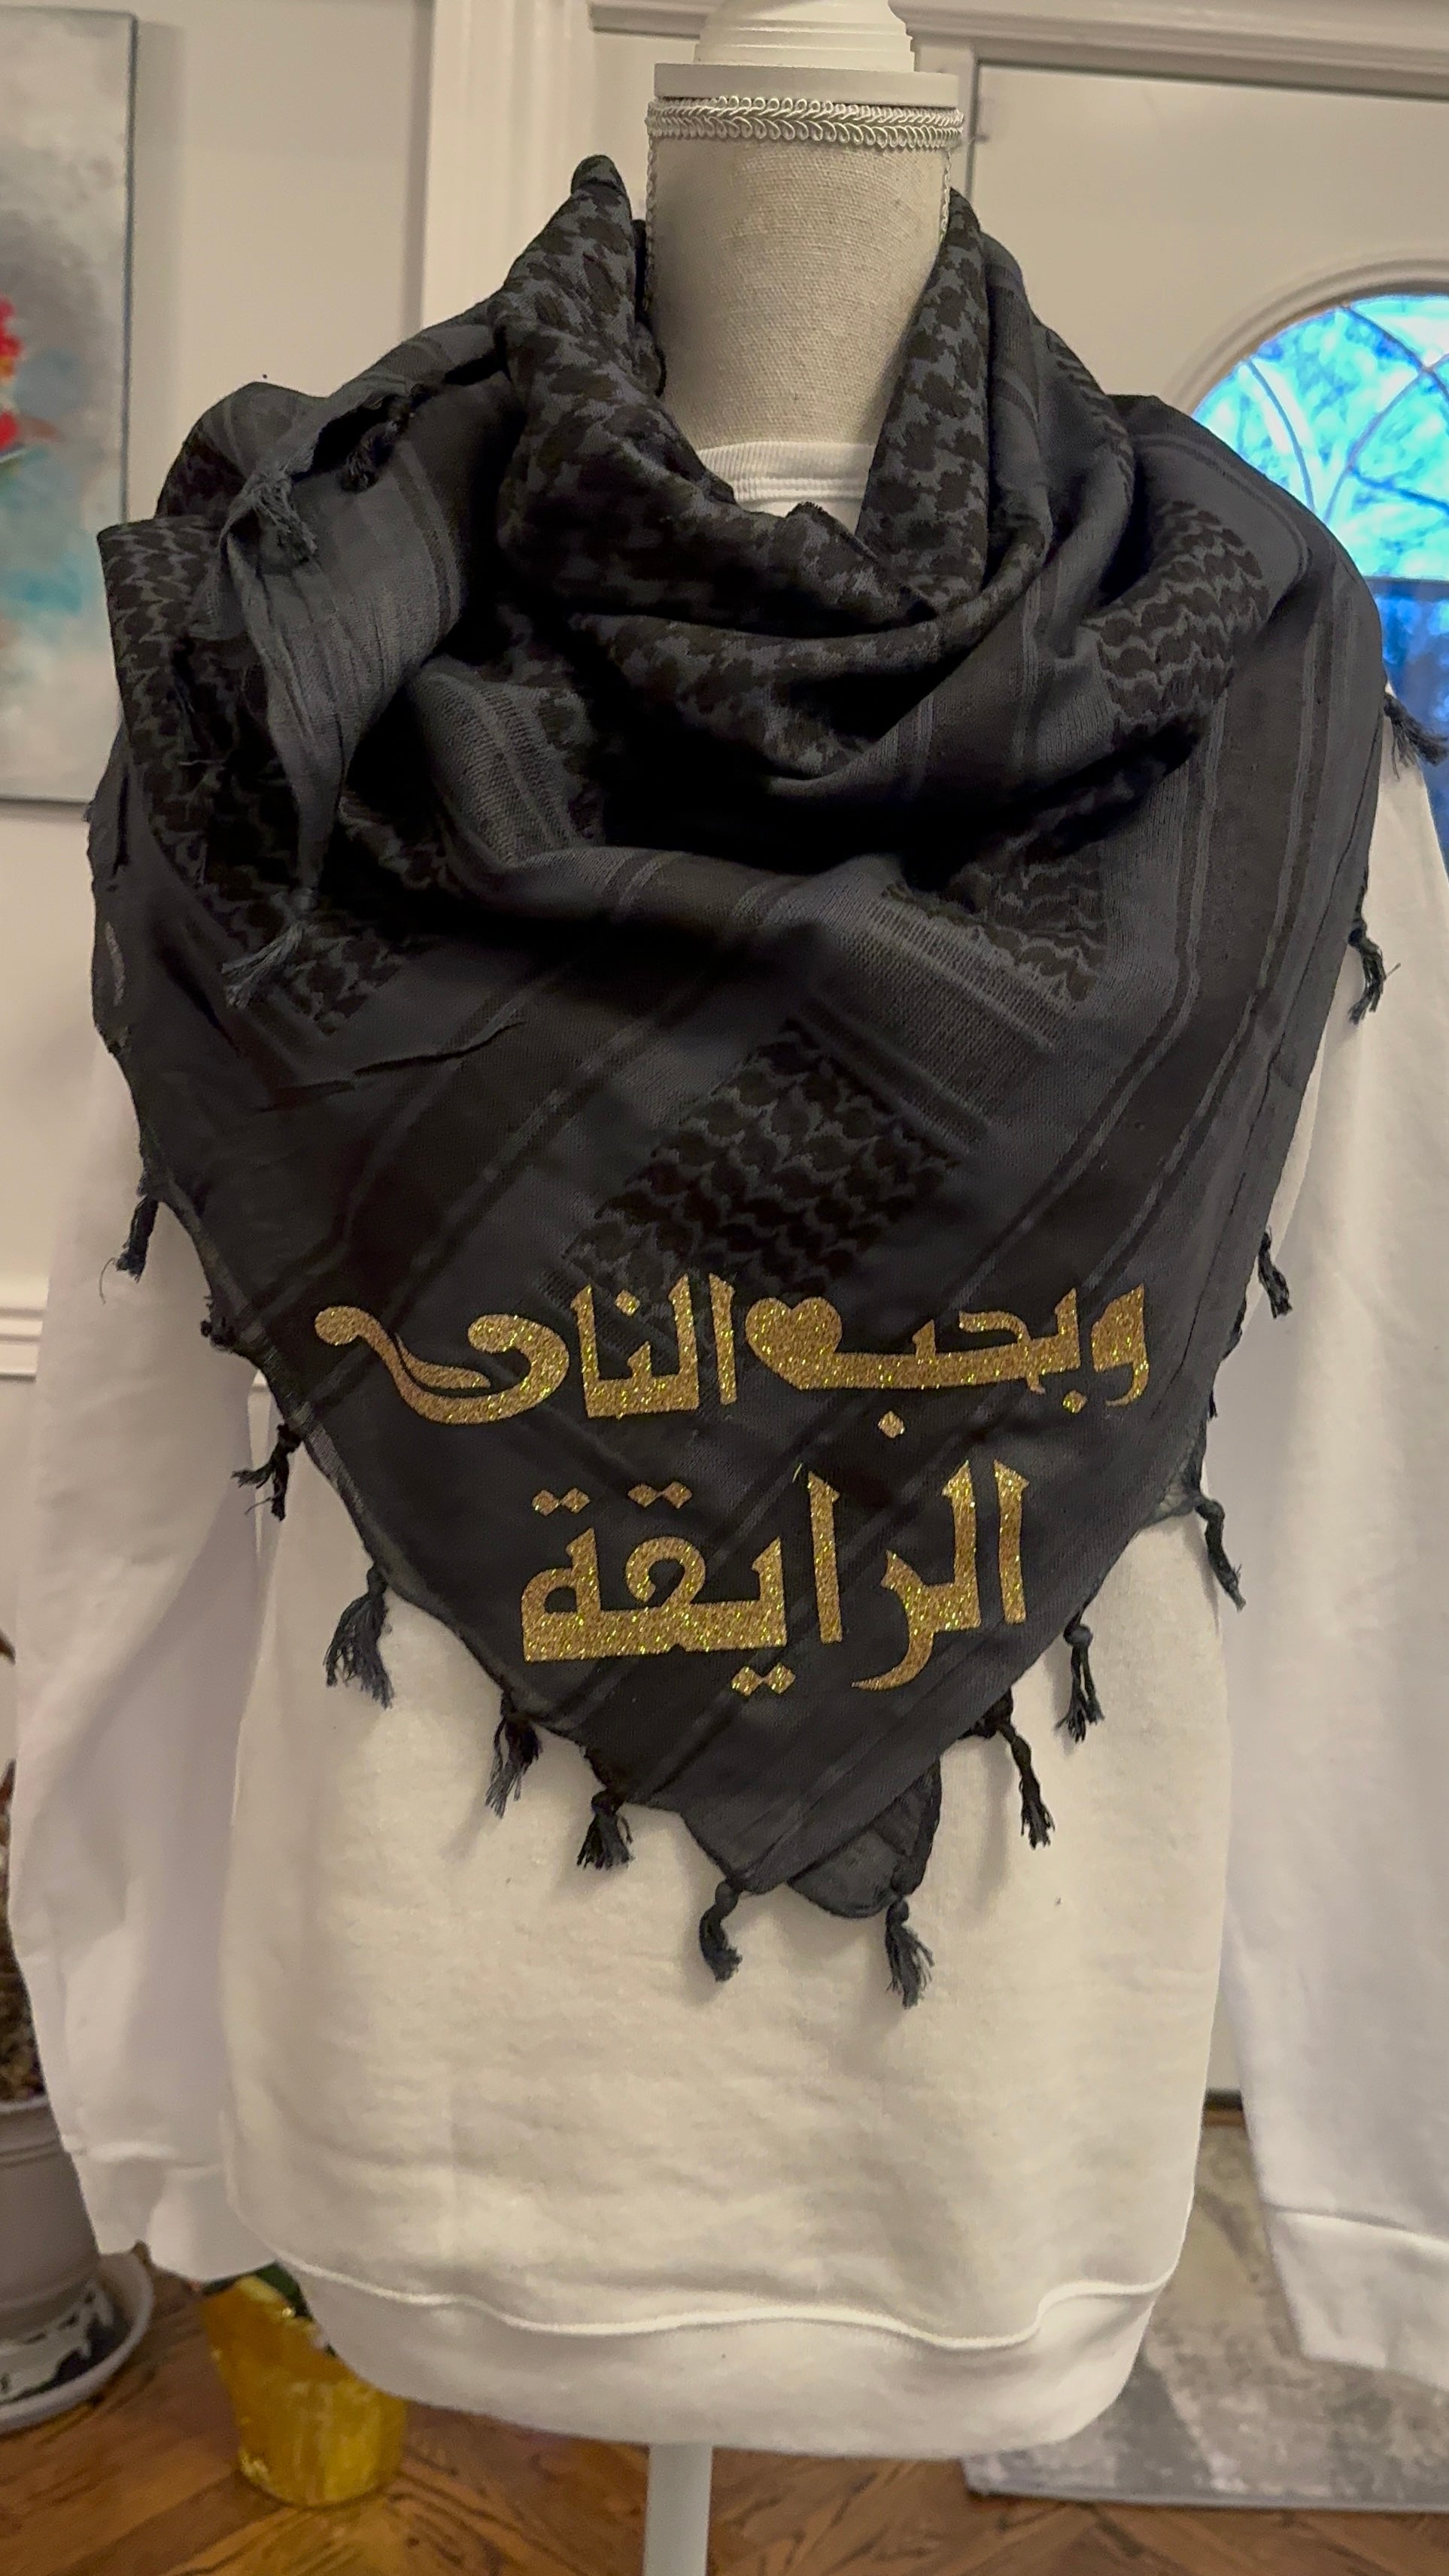 Dark Gray keffiyeh with Arabic calligraphy design